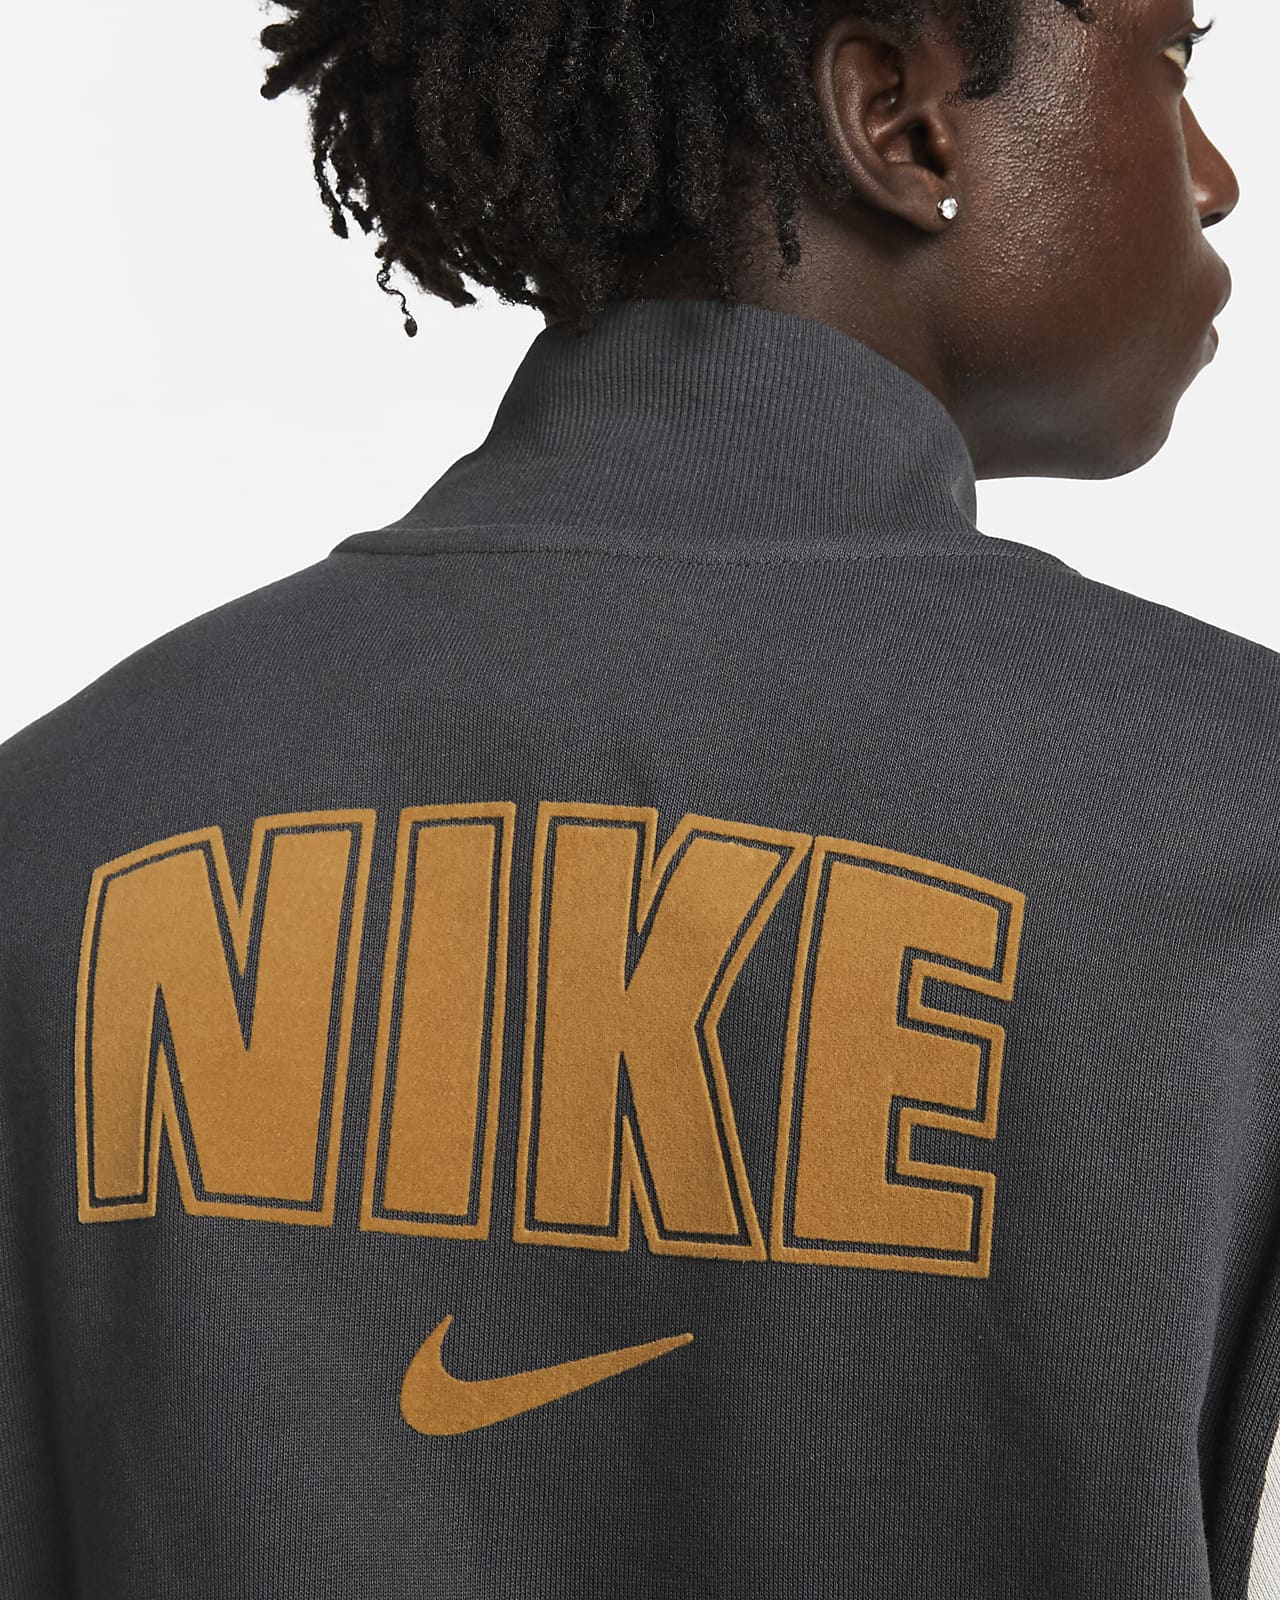 Nike Sportswear Authentics Men's Varsity Jacket